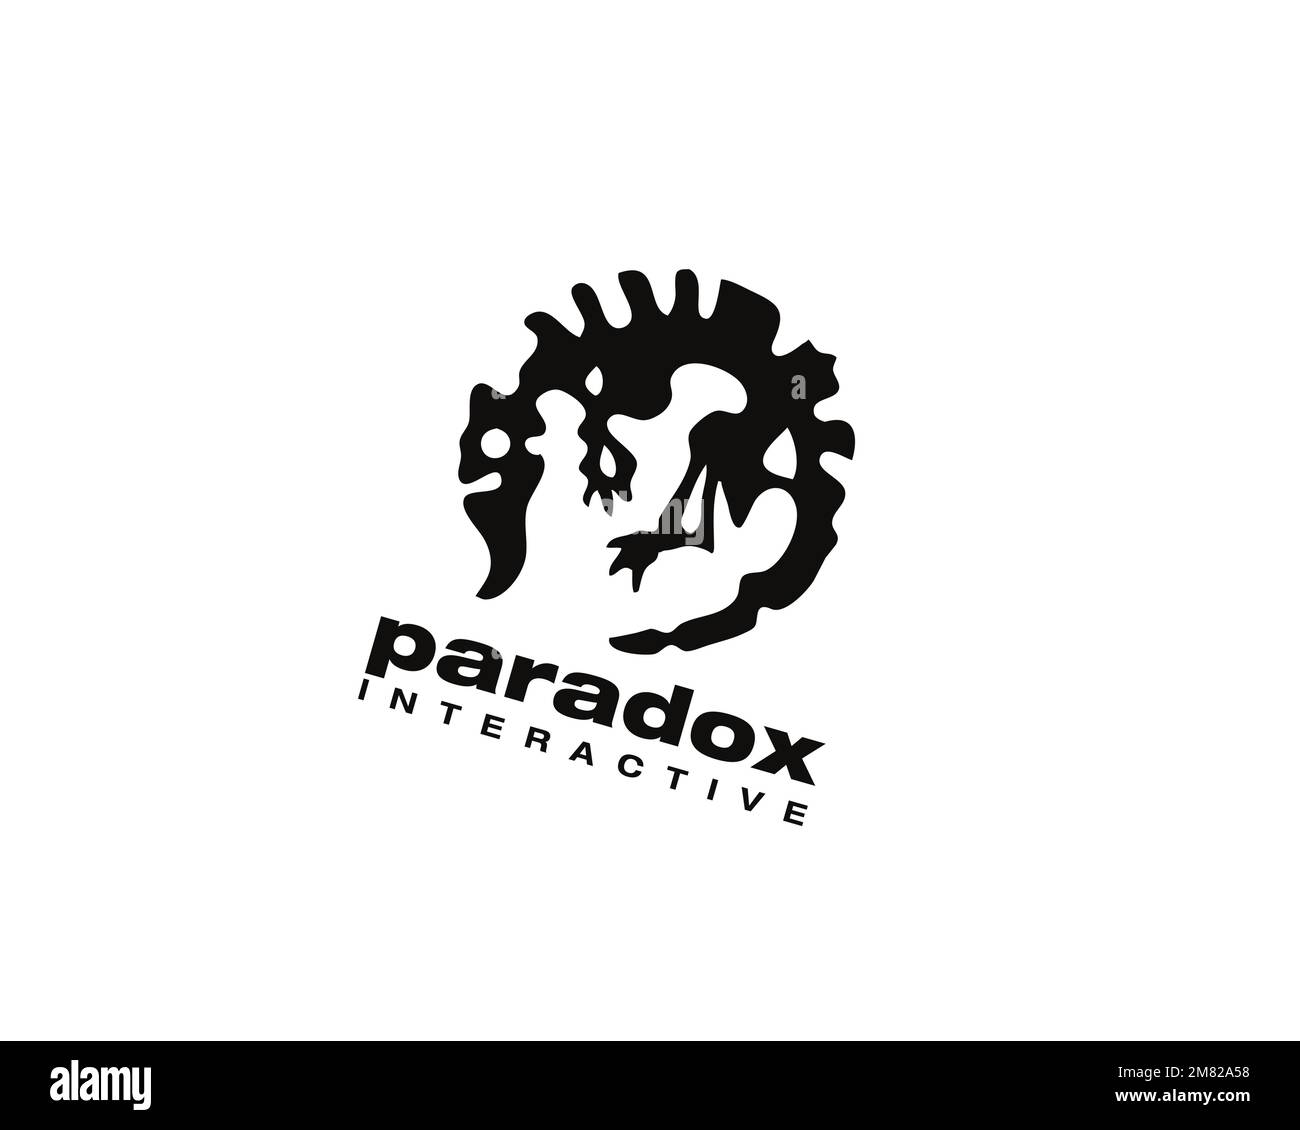 Paradox interattivo, logo ruotato, sfondo bianco B Foto Stock